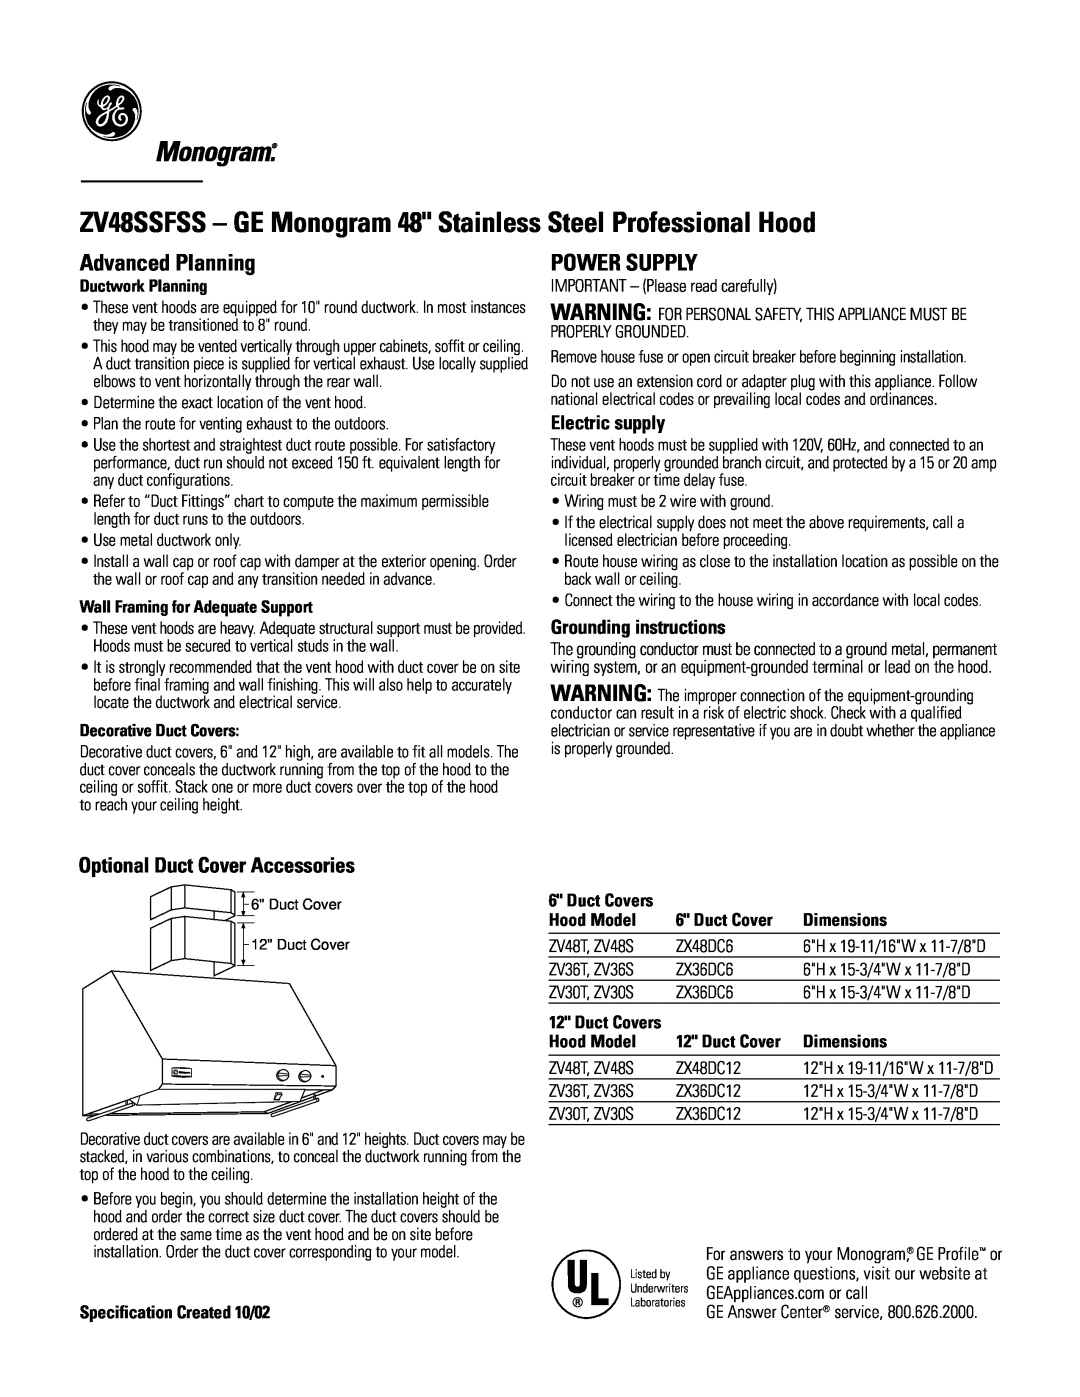 GE Monogram Optional Duct Cover Accessories, ZV48SSFSS - GE Monogram 48 Stainless Steel Professional Hood, Power Supply 